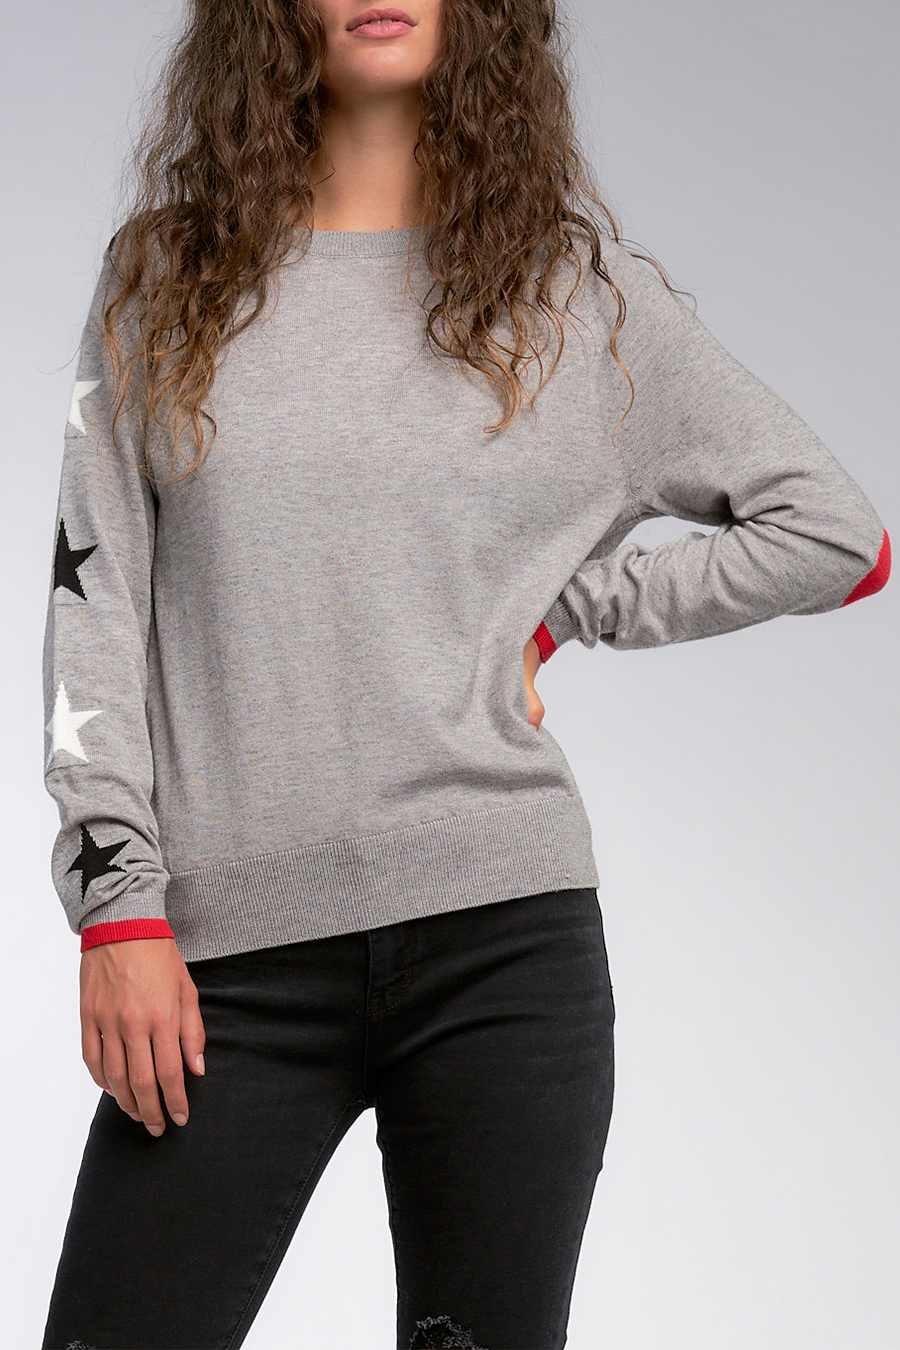 Star Crew Neck Sweater | Ash Grey / Black Stars - Main Image Number 1 of 3